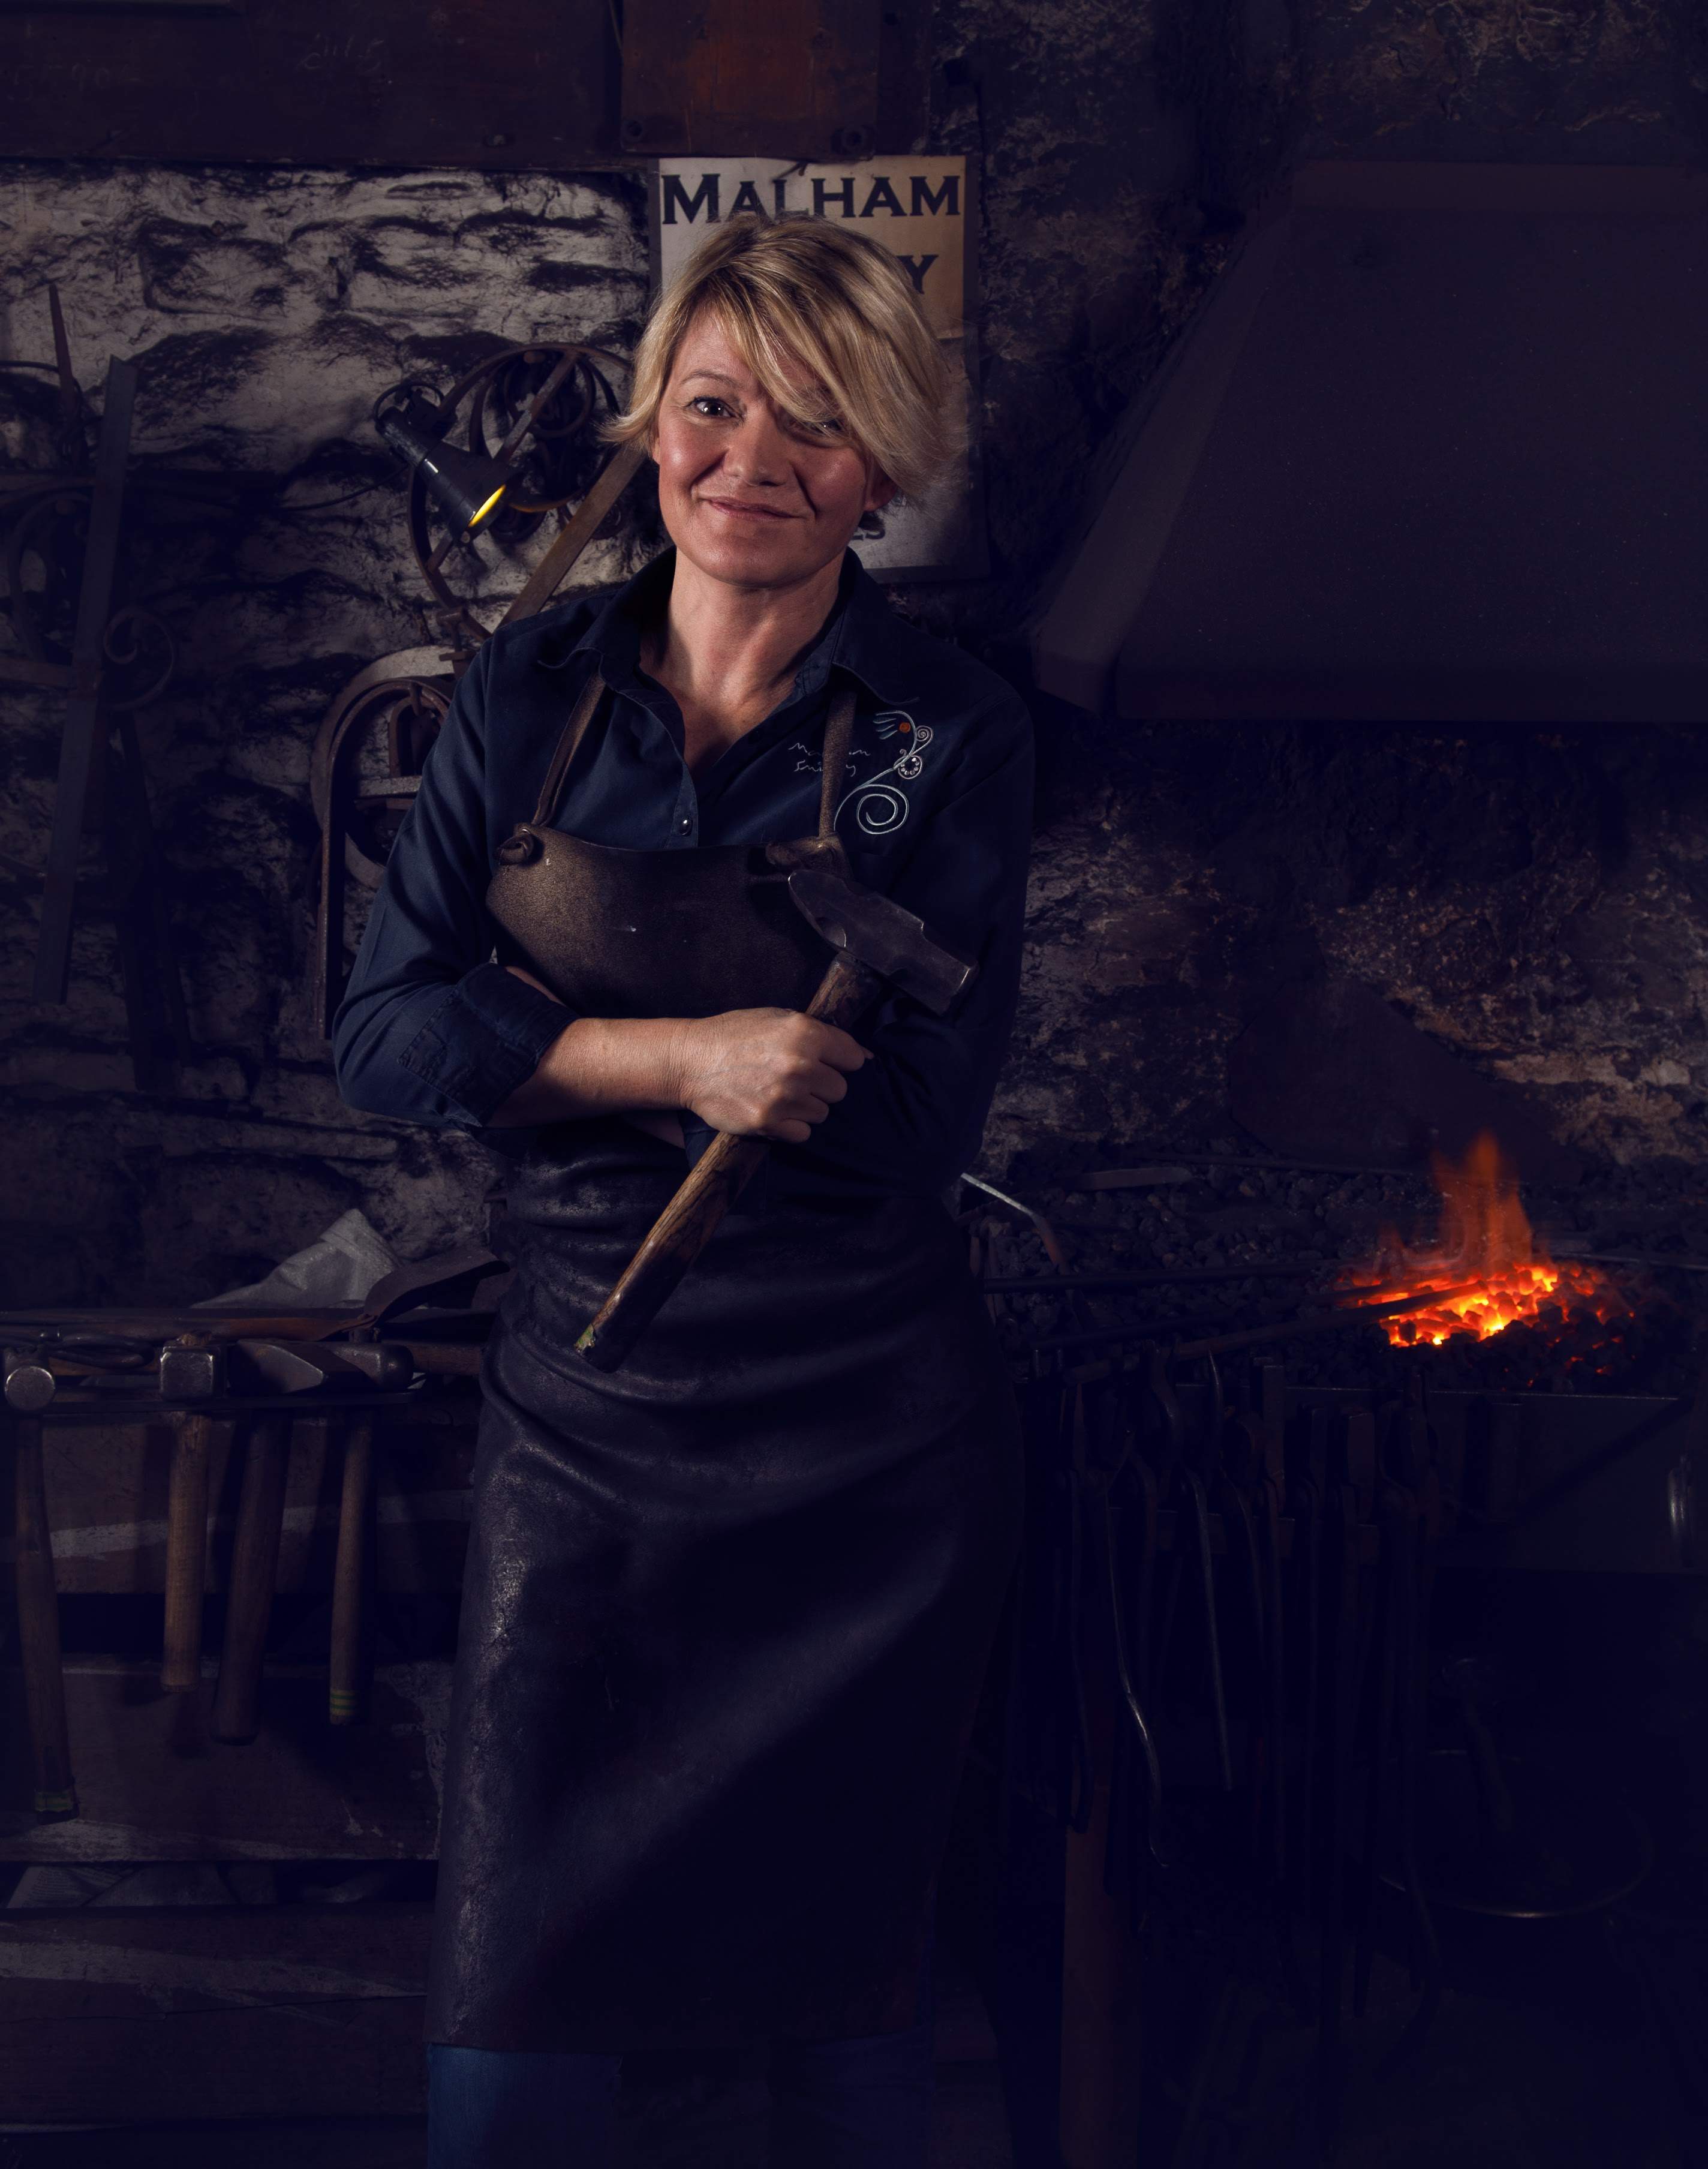 Annabelle Bradley, Blacksmith at the Malham Smithy. Photograph by Clinton Lofthouse